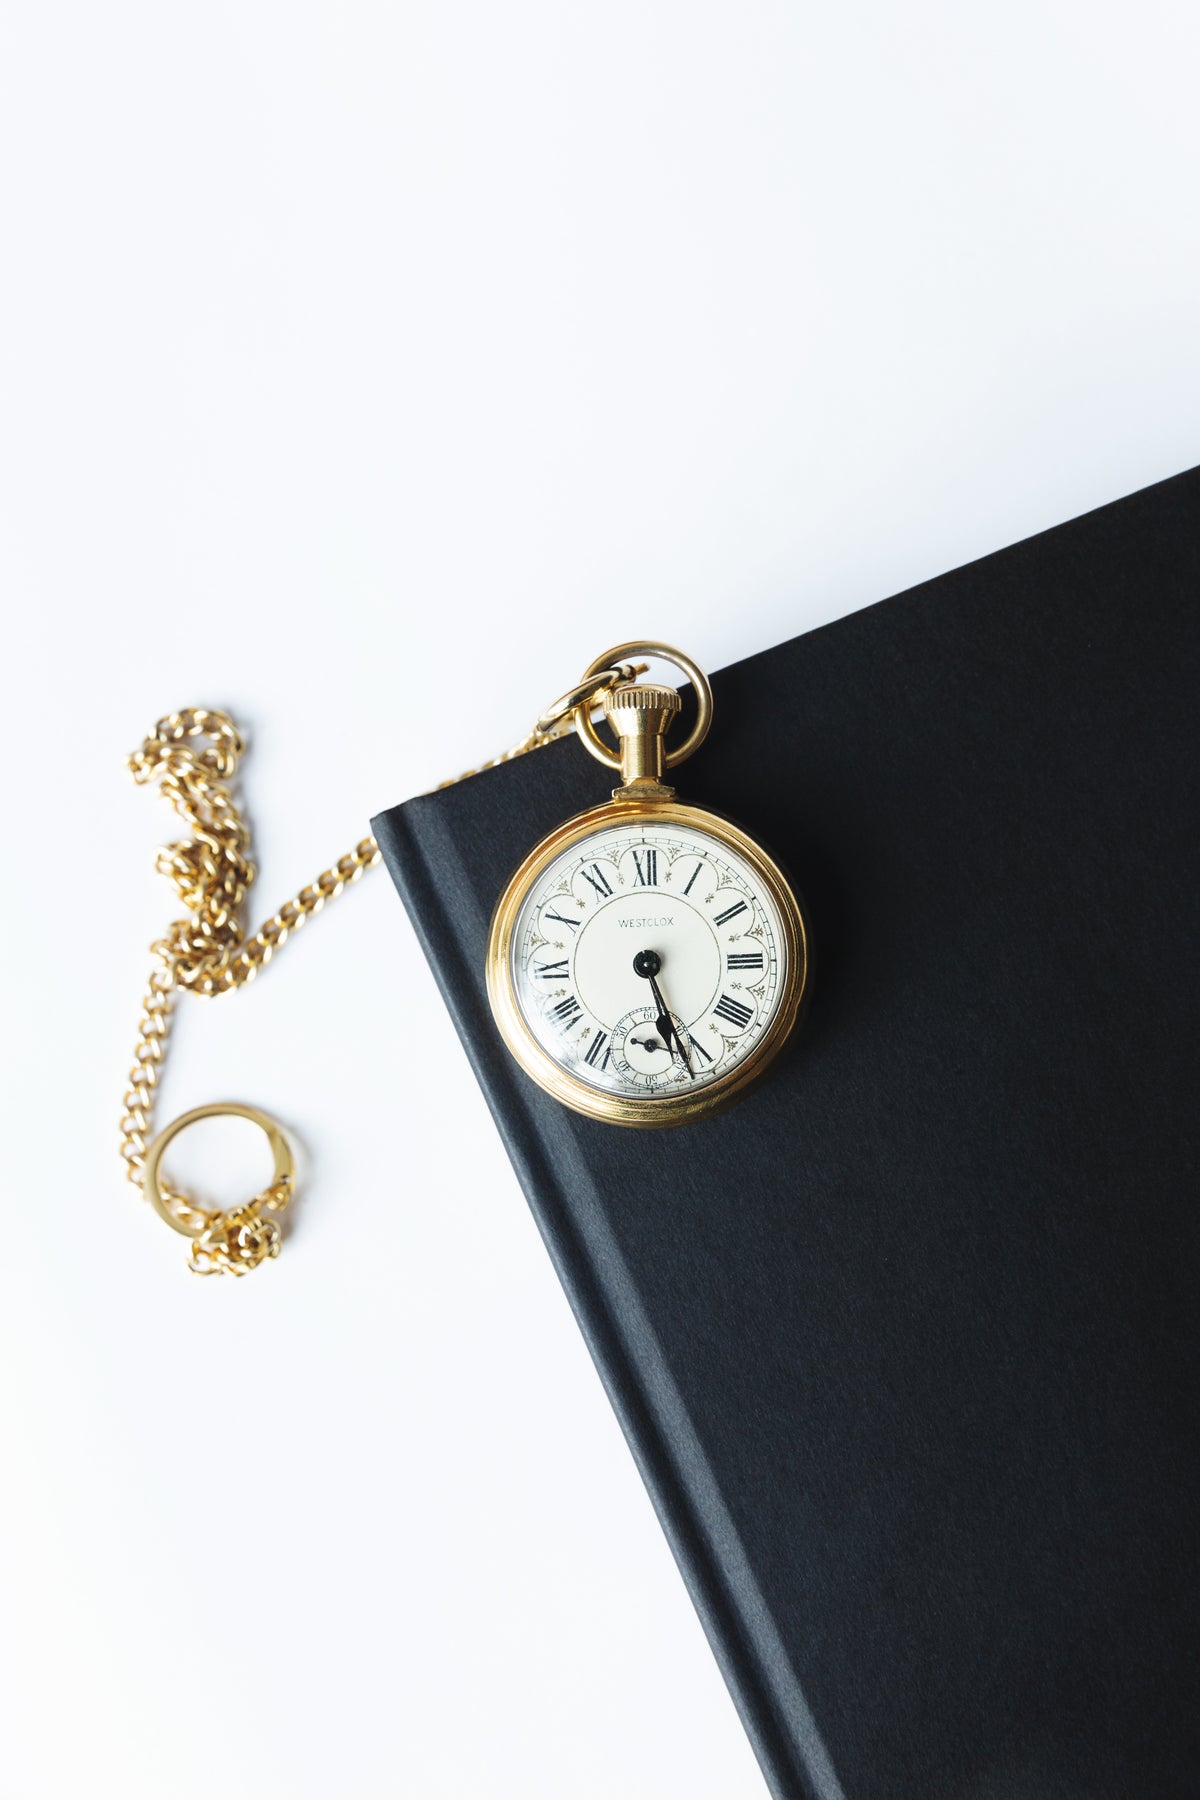 gold pocket watch on a black notebook